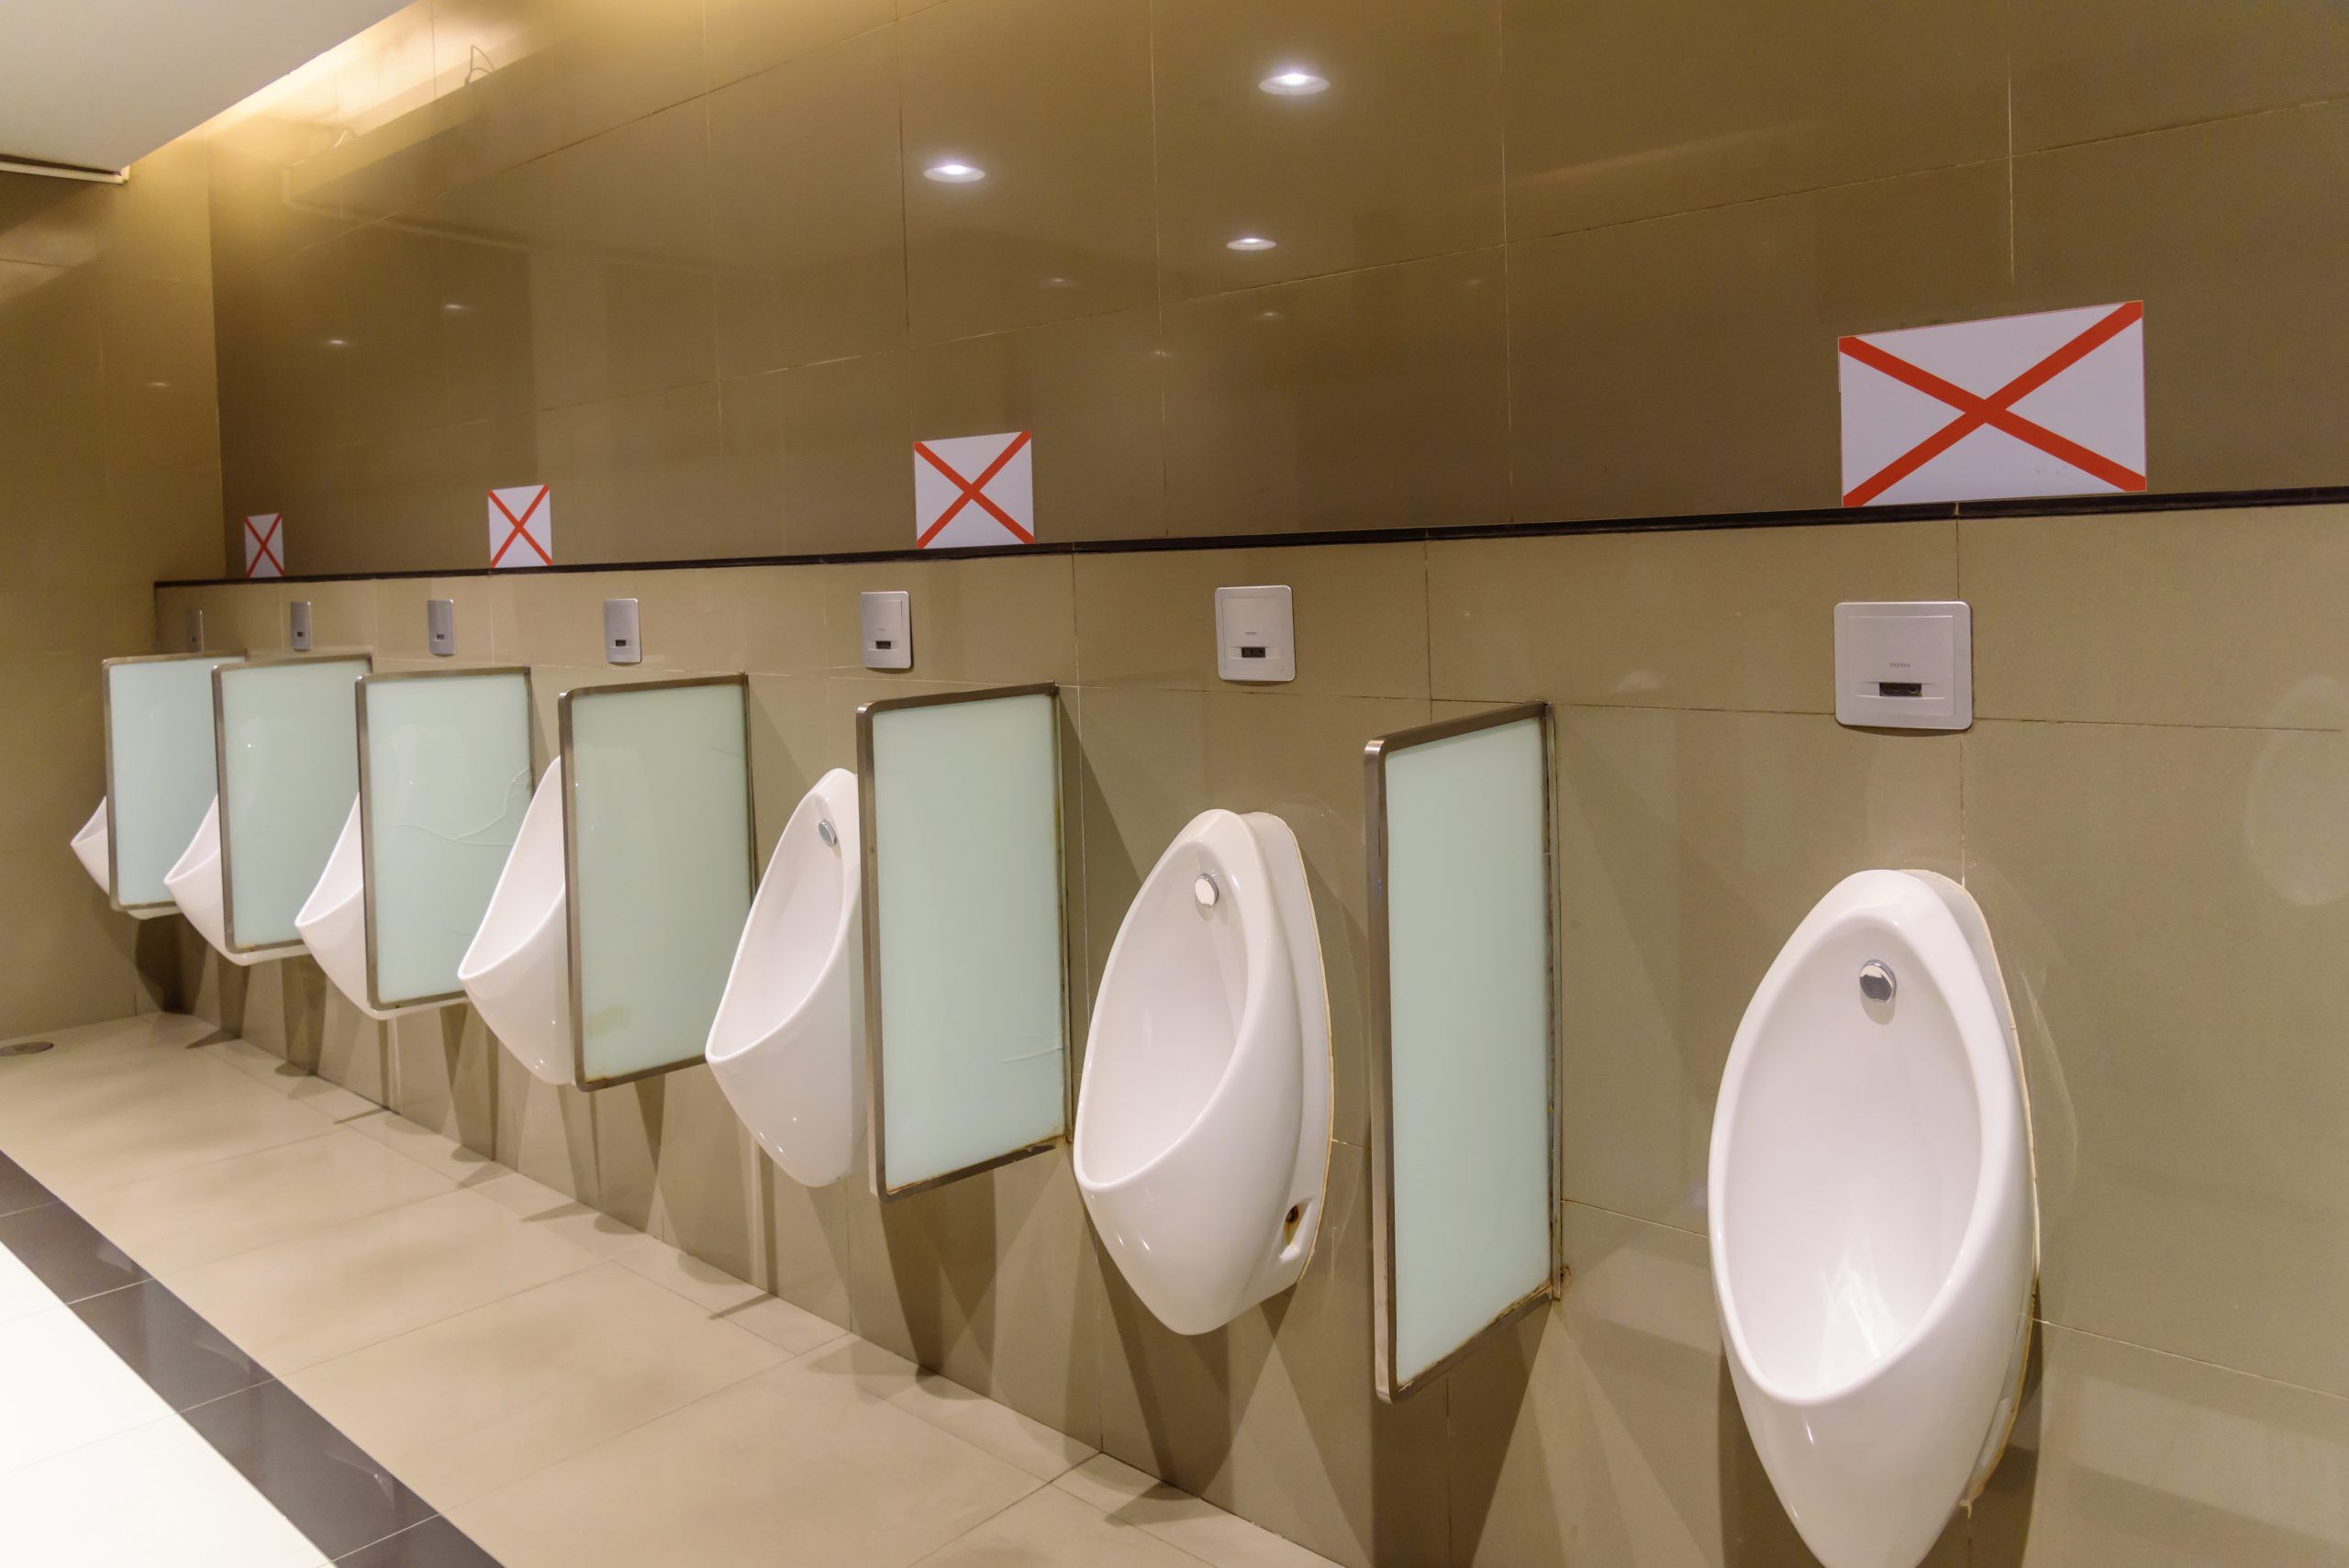 Public washrooms increase risk of COVID-19 exposure. Stock/Getty